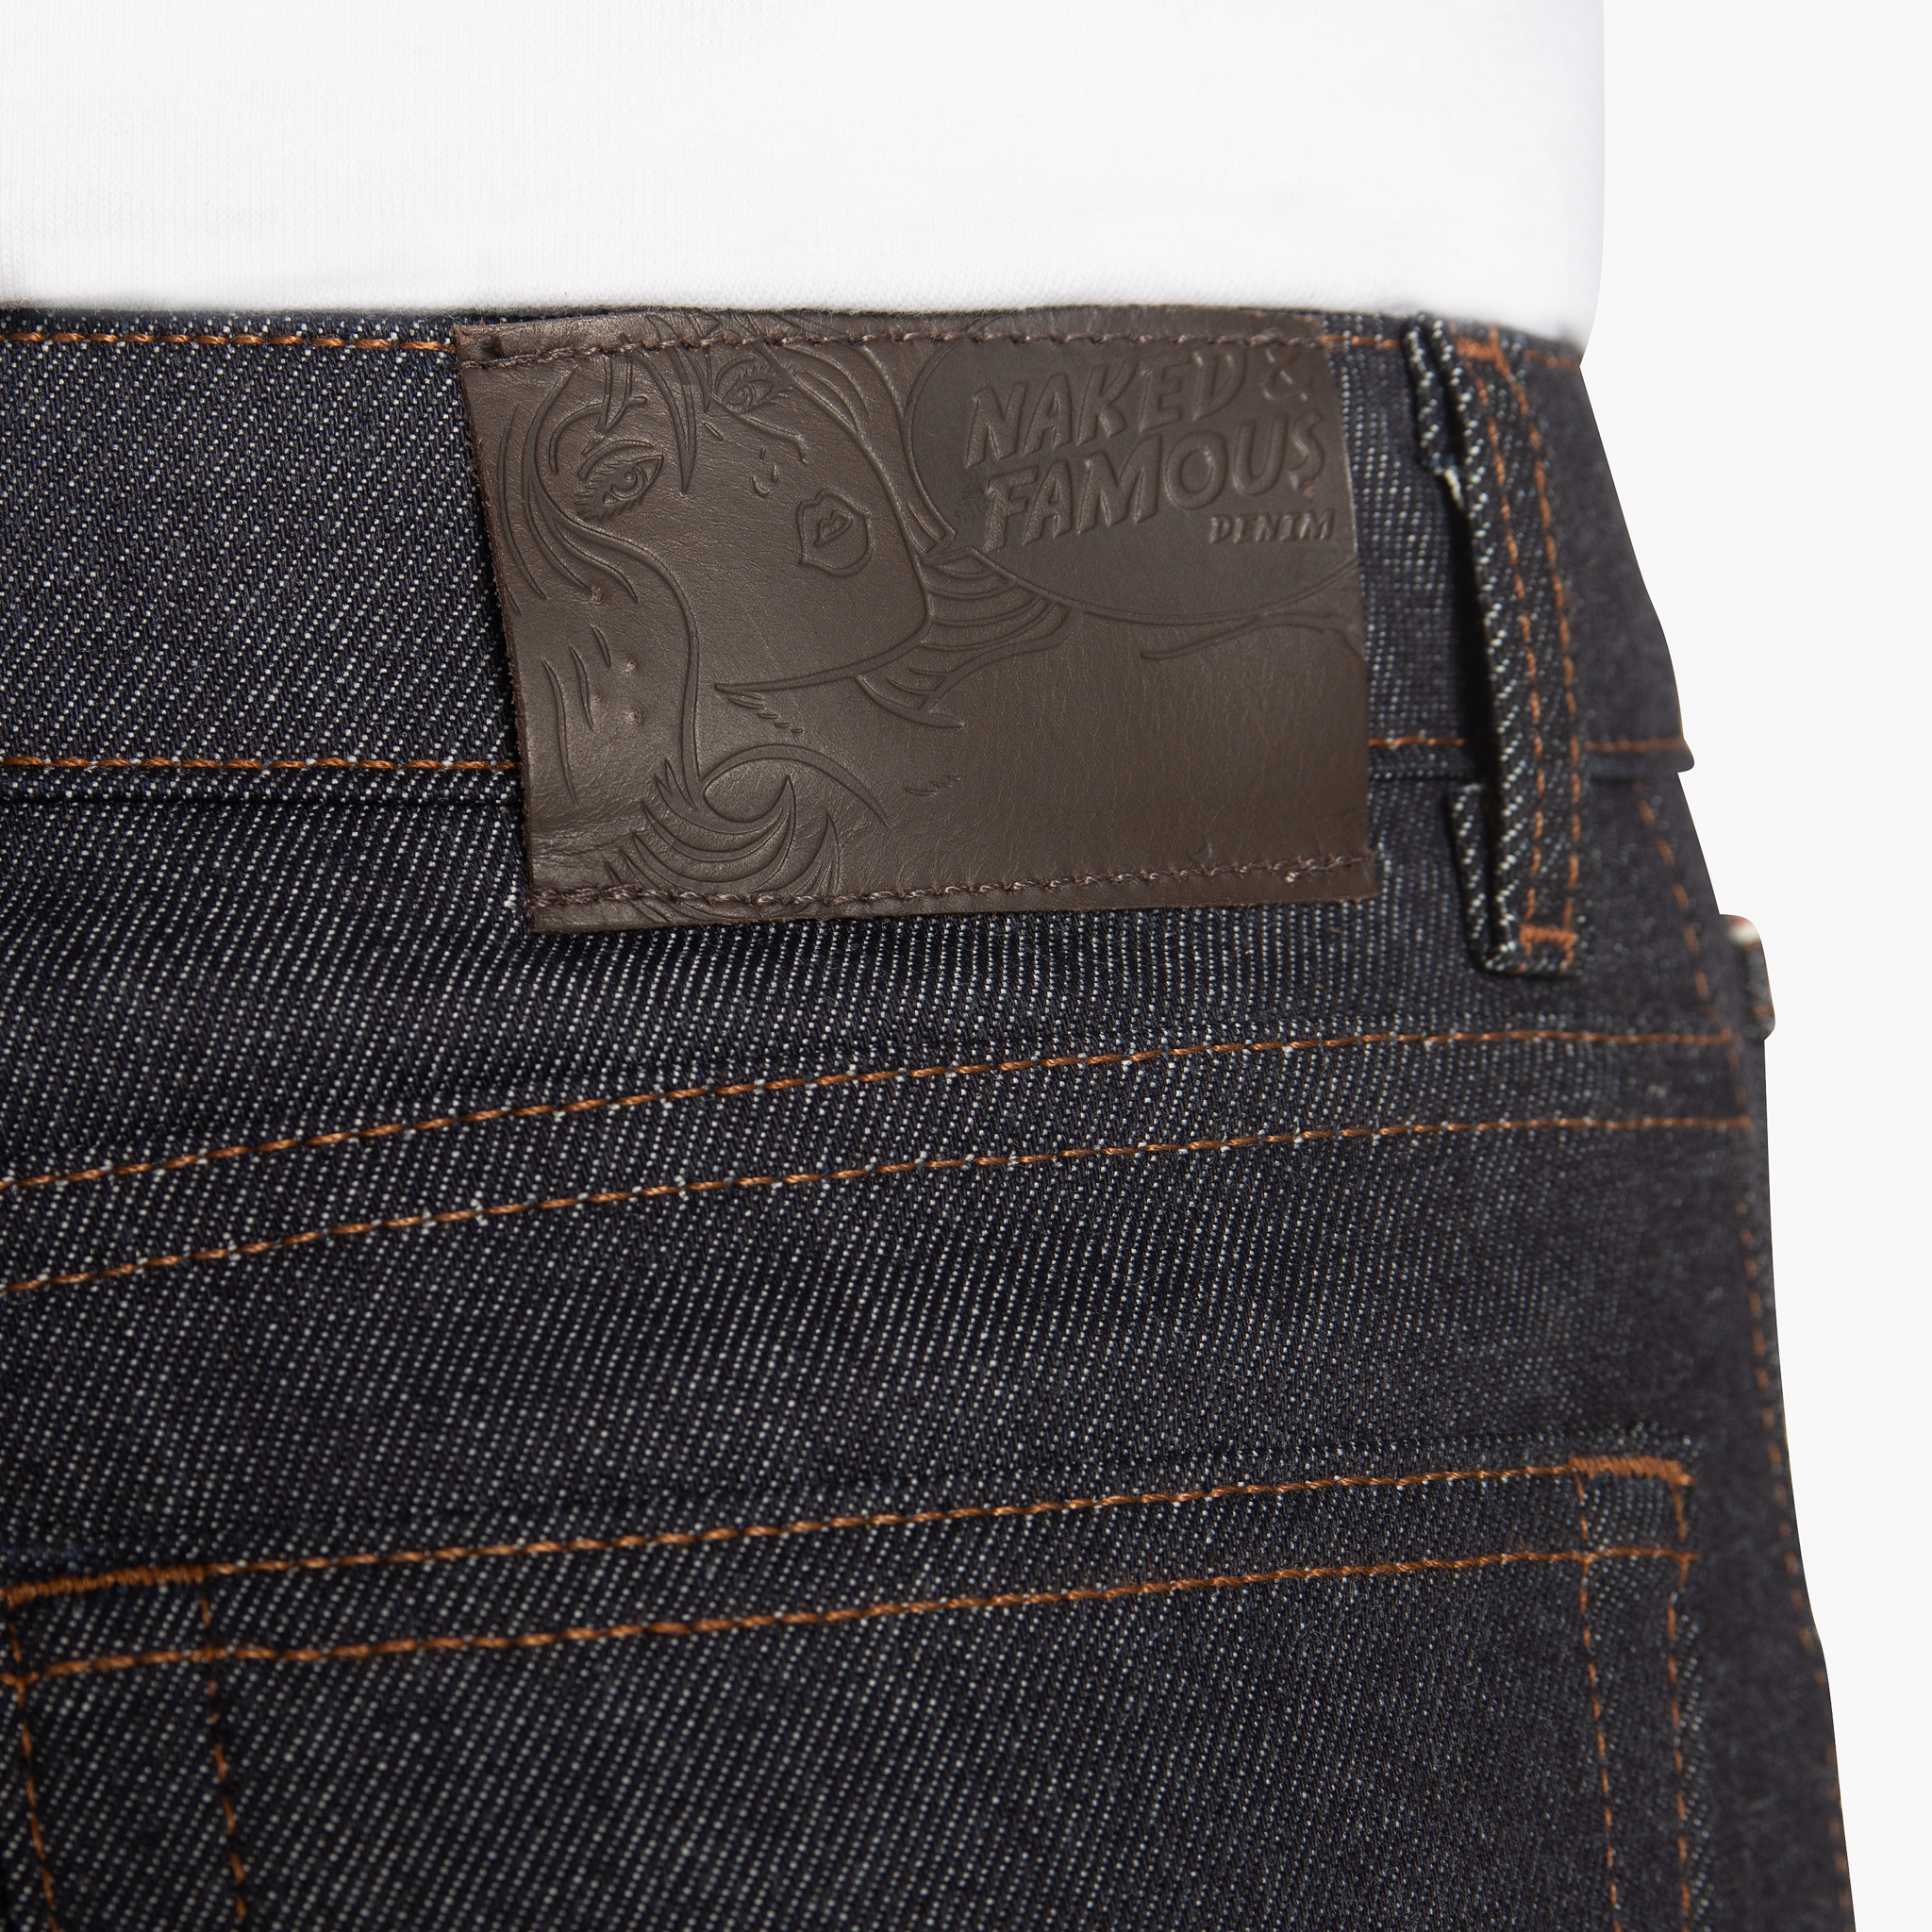  Women’s 11oz Indigo Selvedge jeans - leather patch 